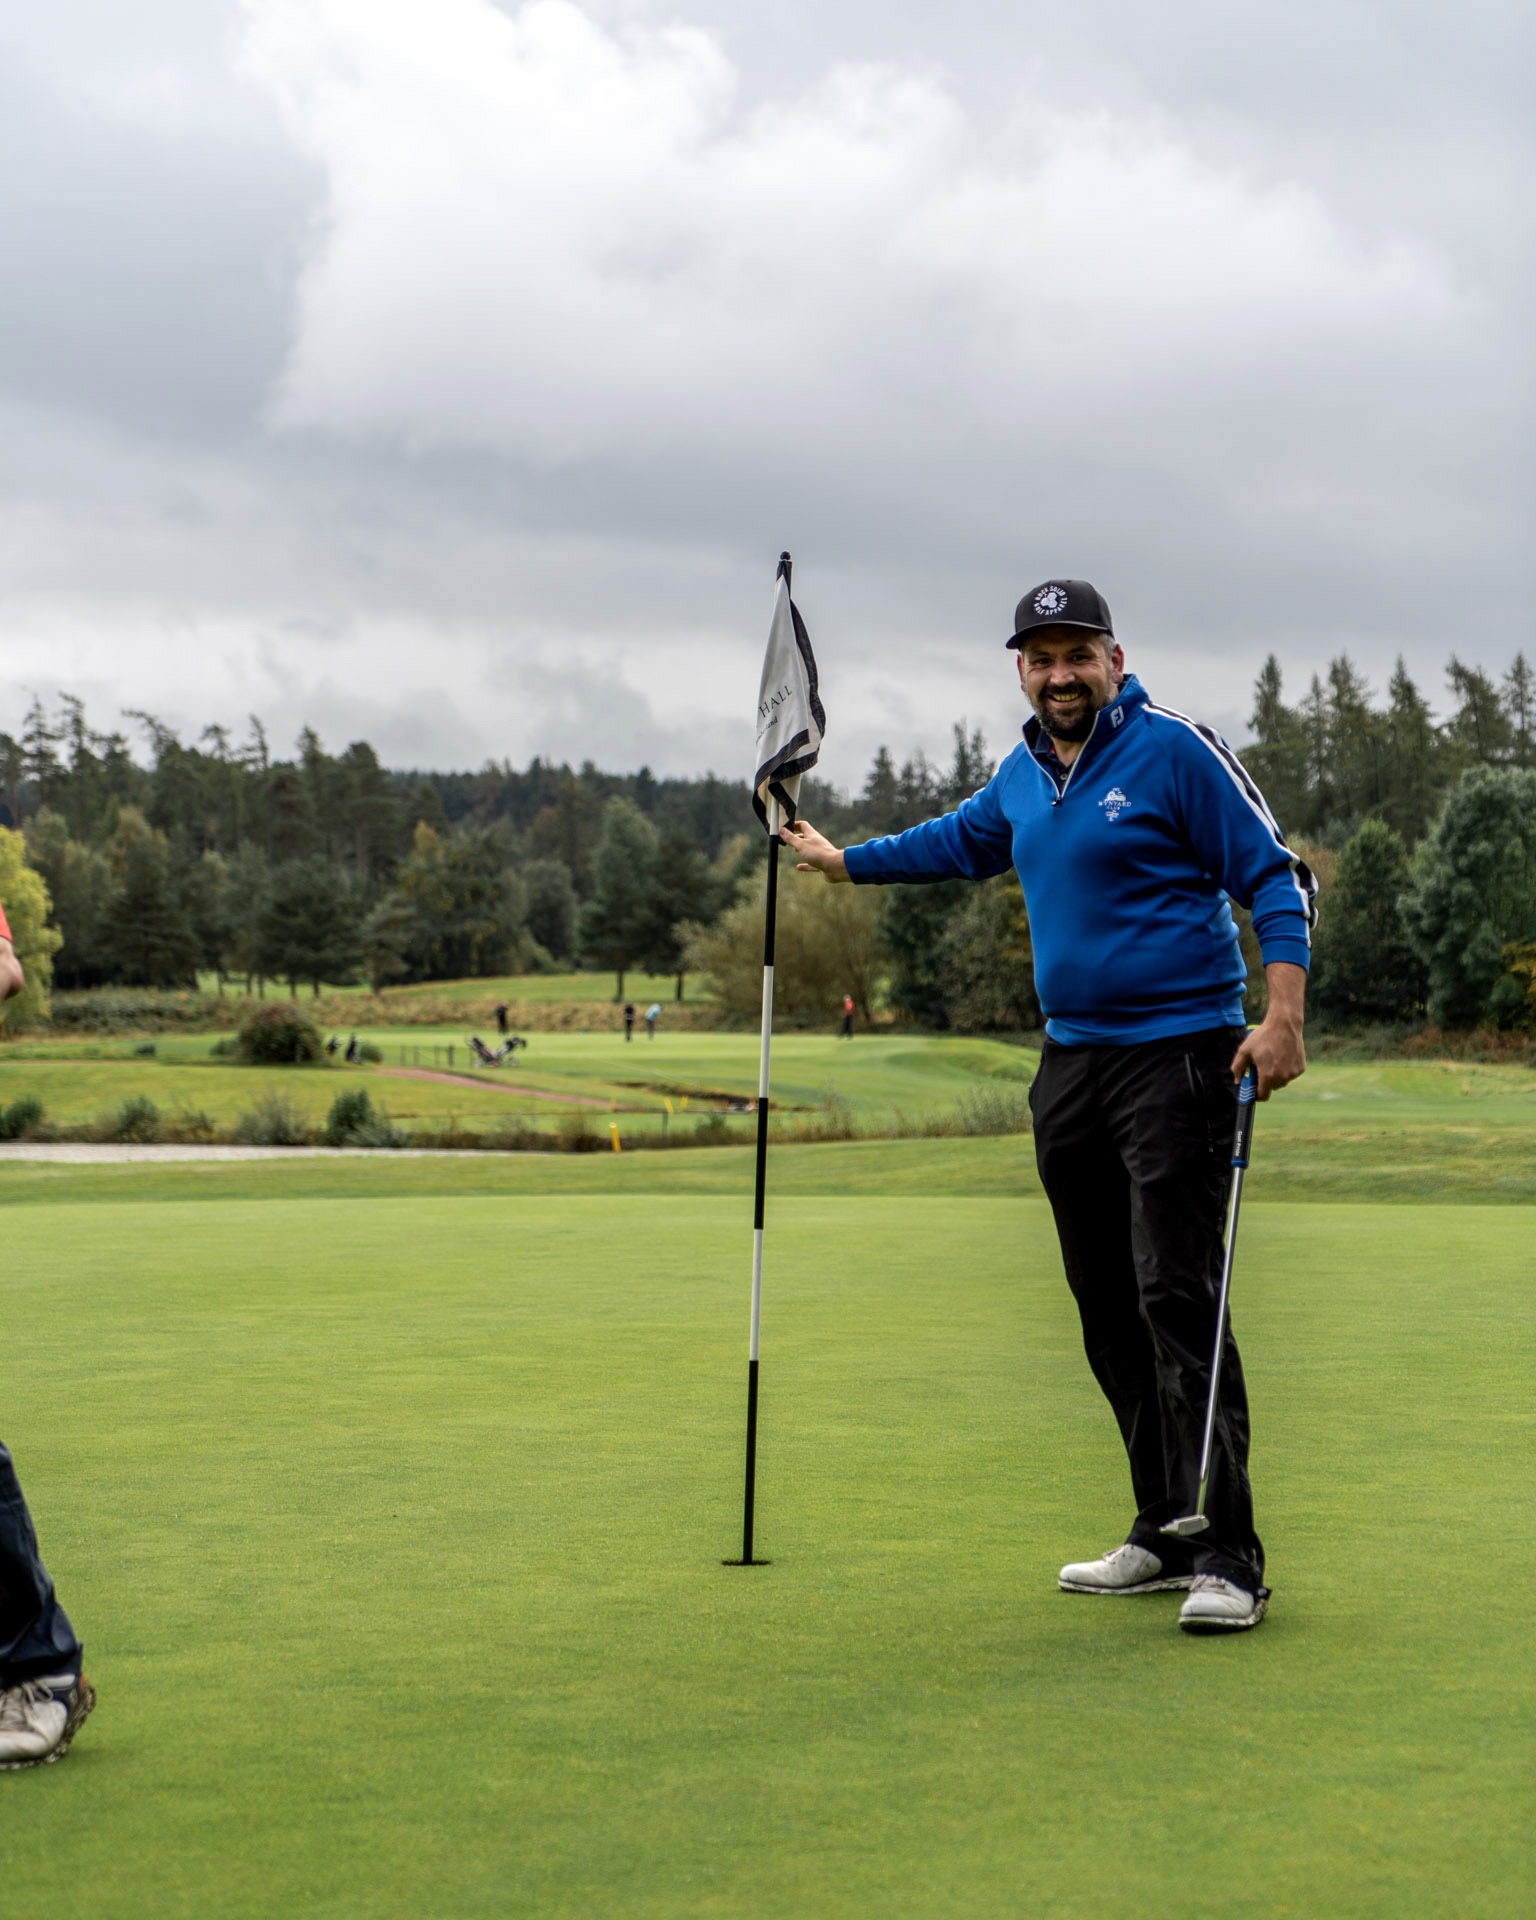 Team Titleist Regional Golf Days prove big hit with golfers in UK